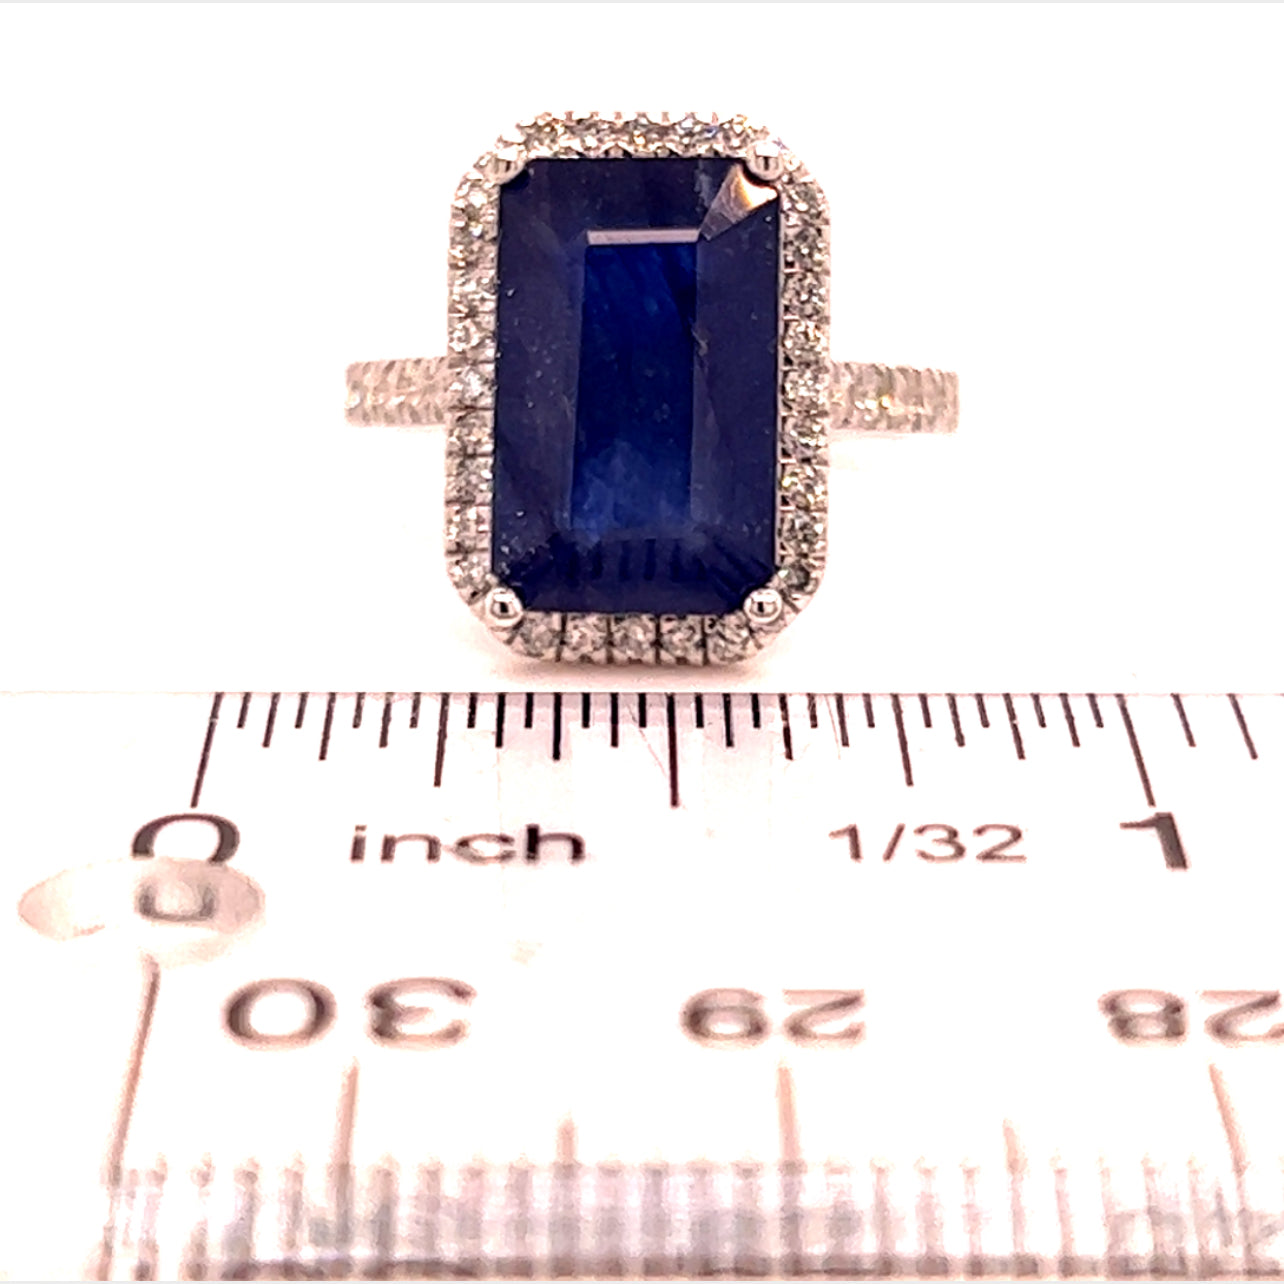 Sapphire Diamond Ring Size 6.25 14k Gold 6.84 TCW Certified $3,200 215421 - Certified Fine Jewelry